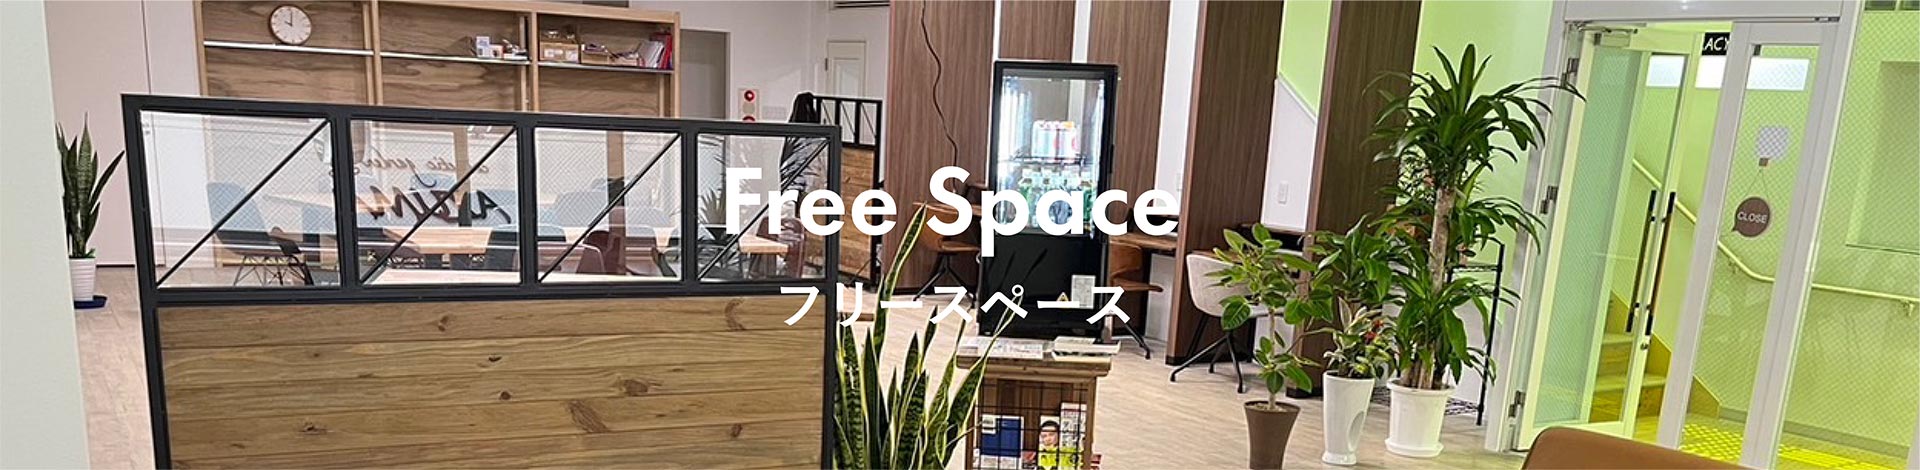 Free Space ─ フリースペース